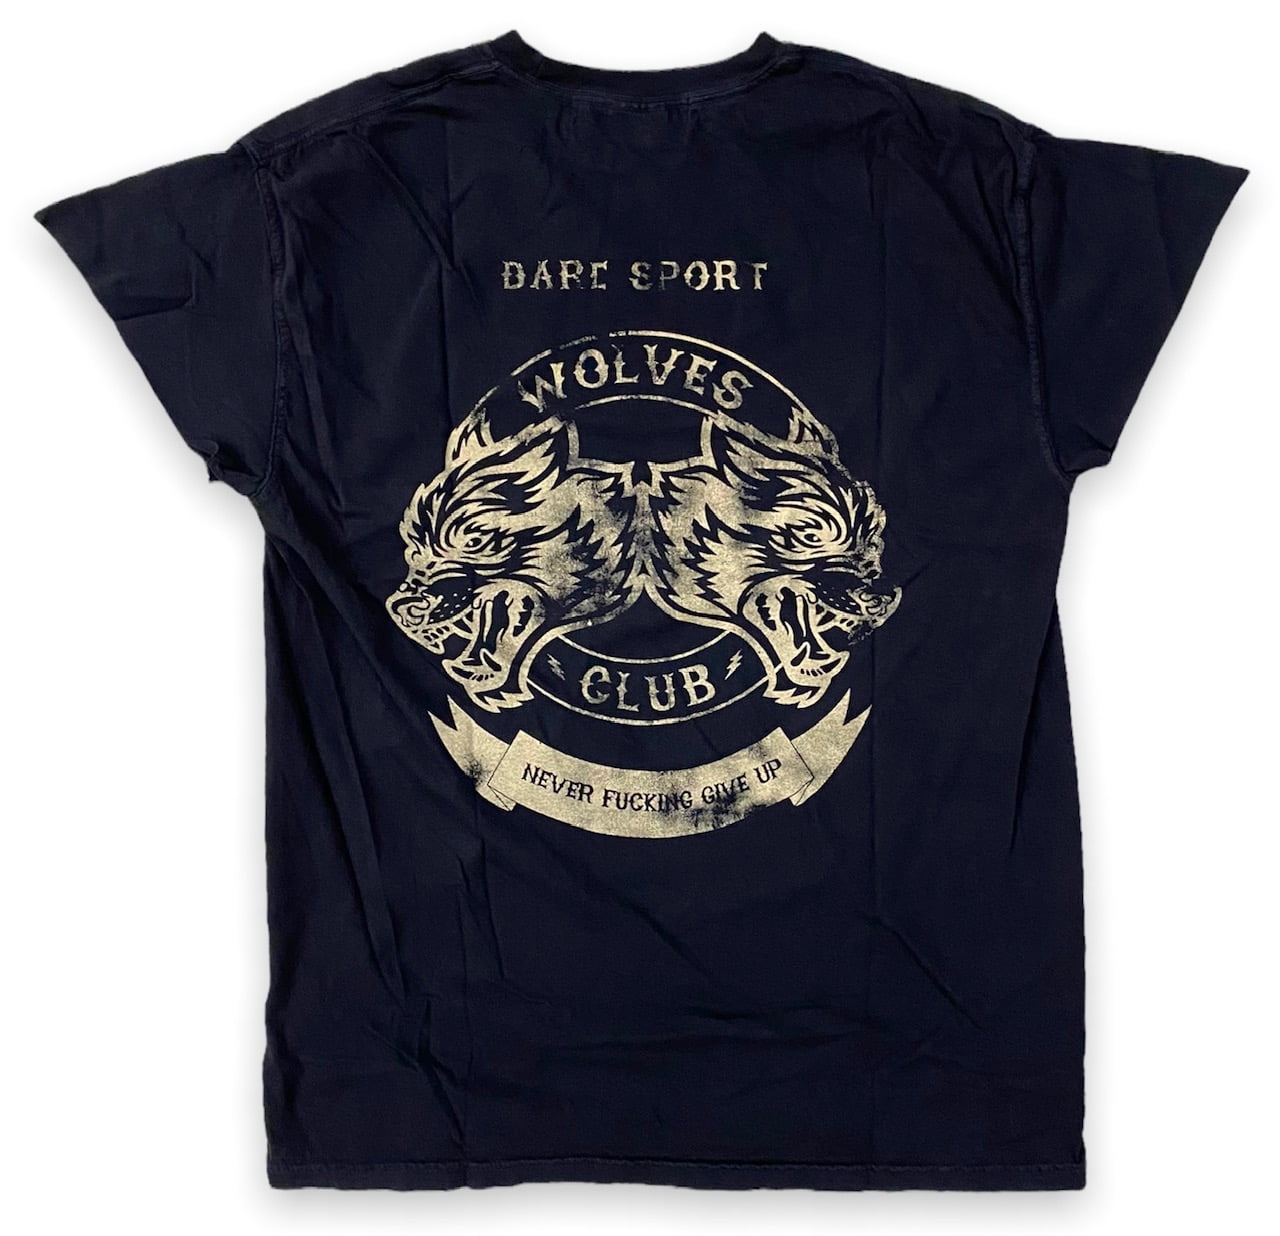 Darc Sport Men's Wolves Club Distressed Graphic Print Cap Sleeve Tee  T-Shirt (XX-Large, Black/Tan)